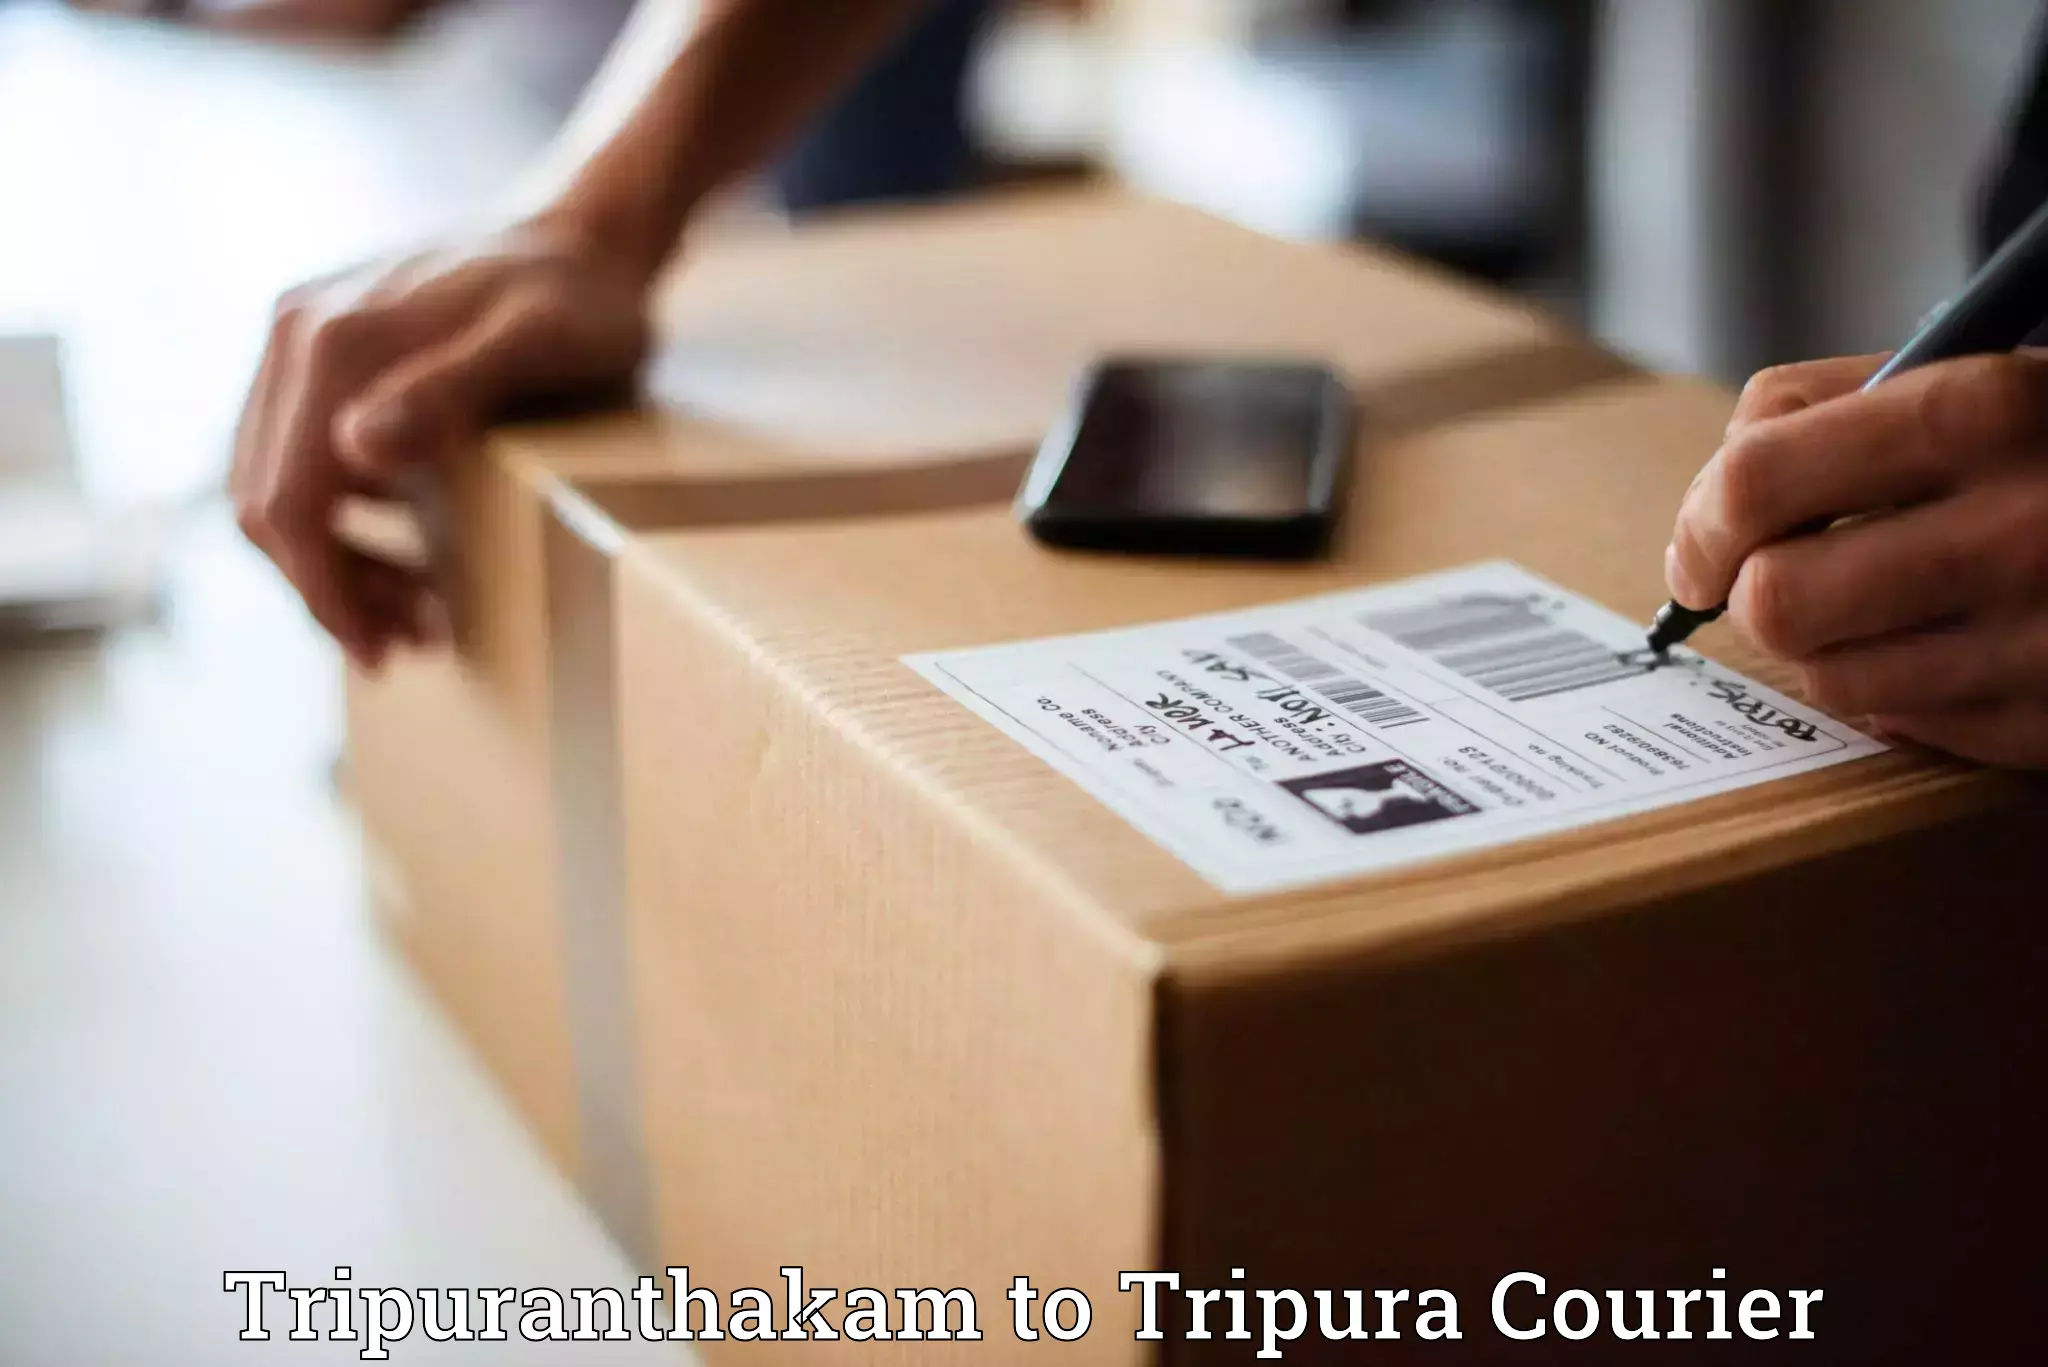 Courier service comparison Tripuranthakam to Kailashahar